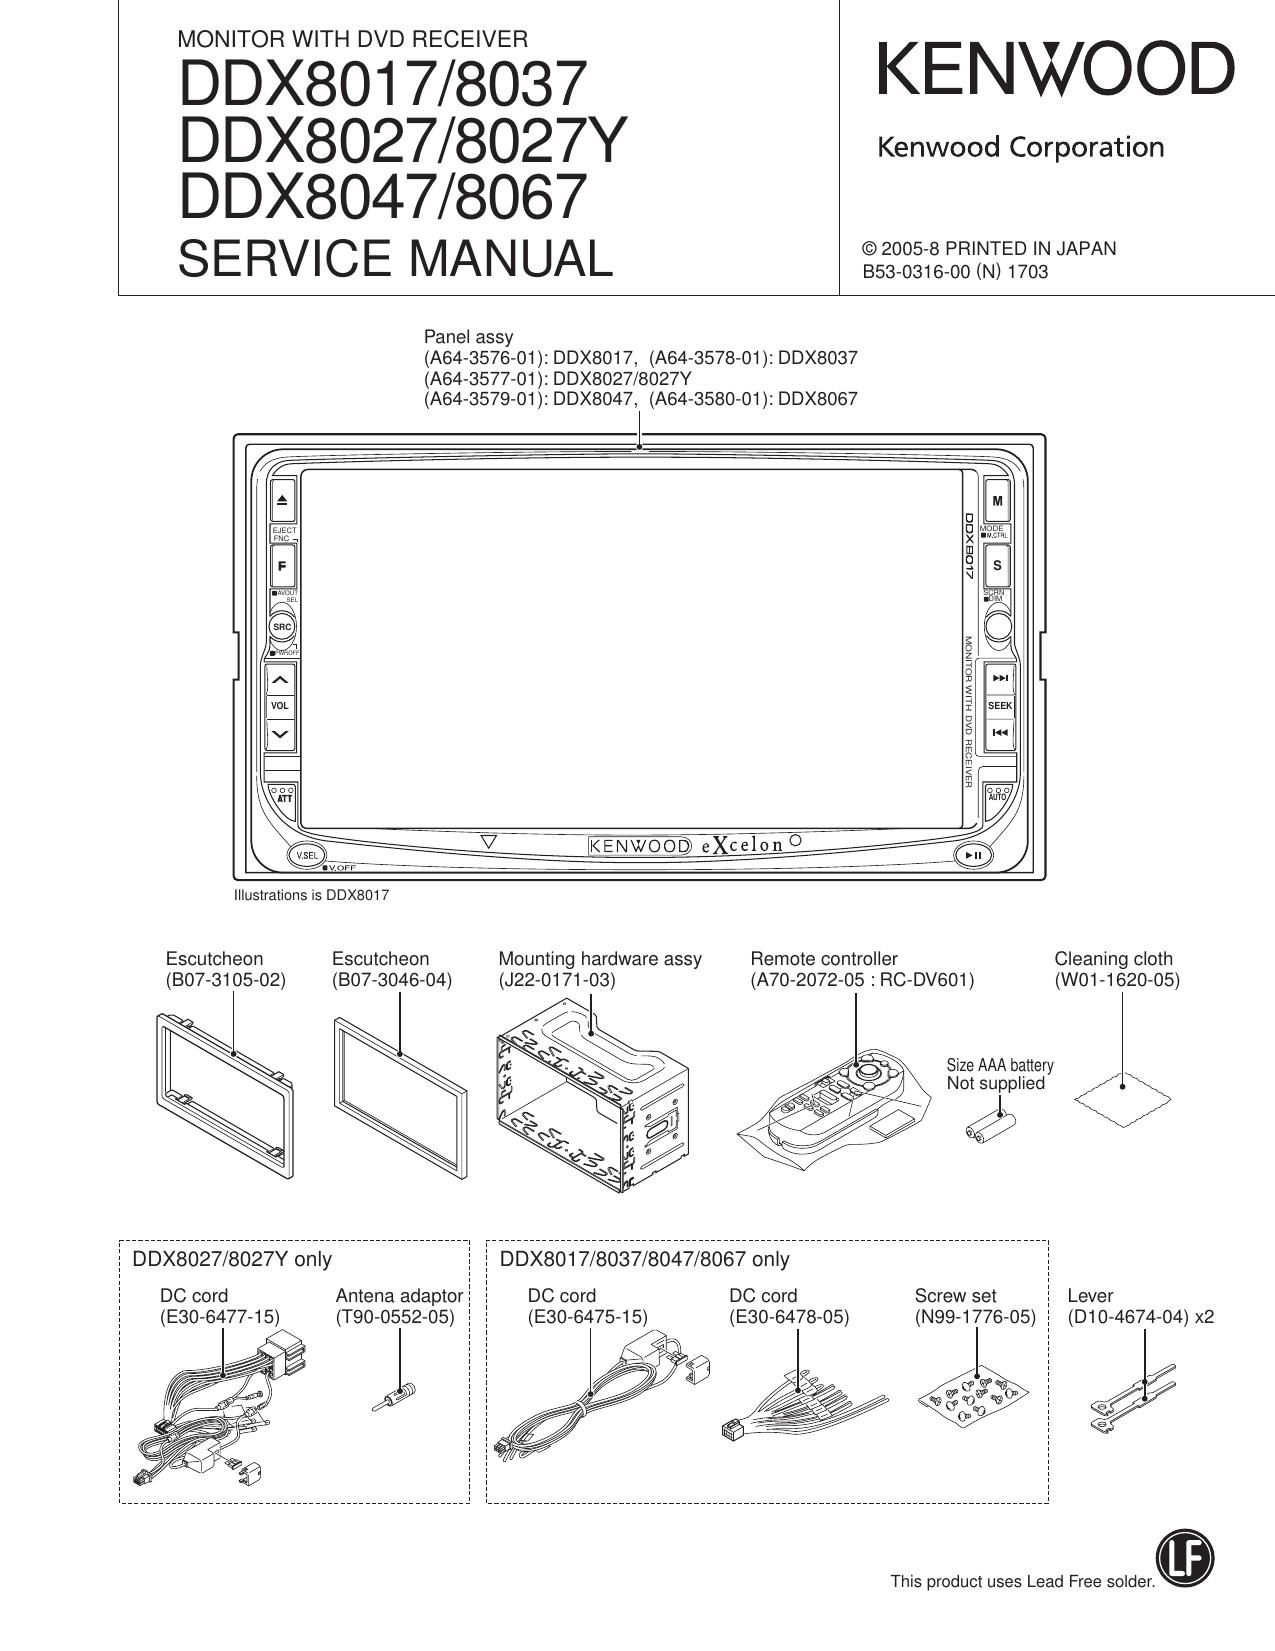 Kenwood DDX 8017 Service Manual